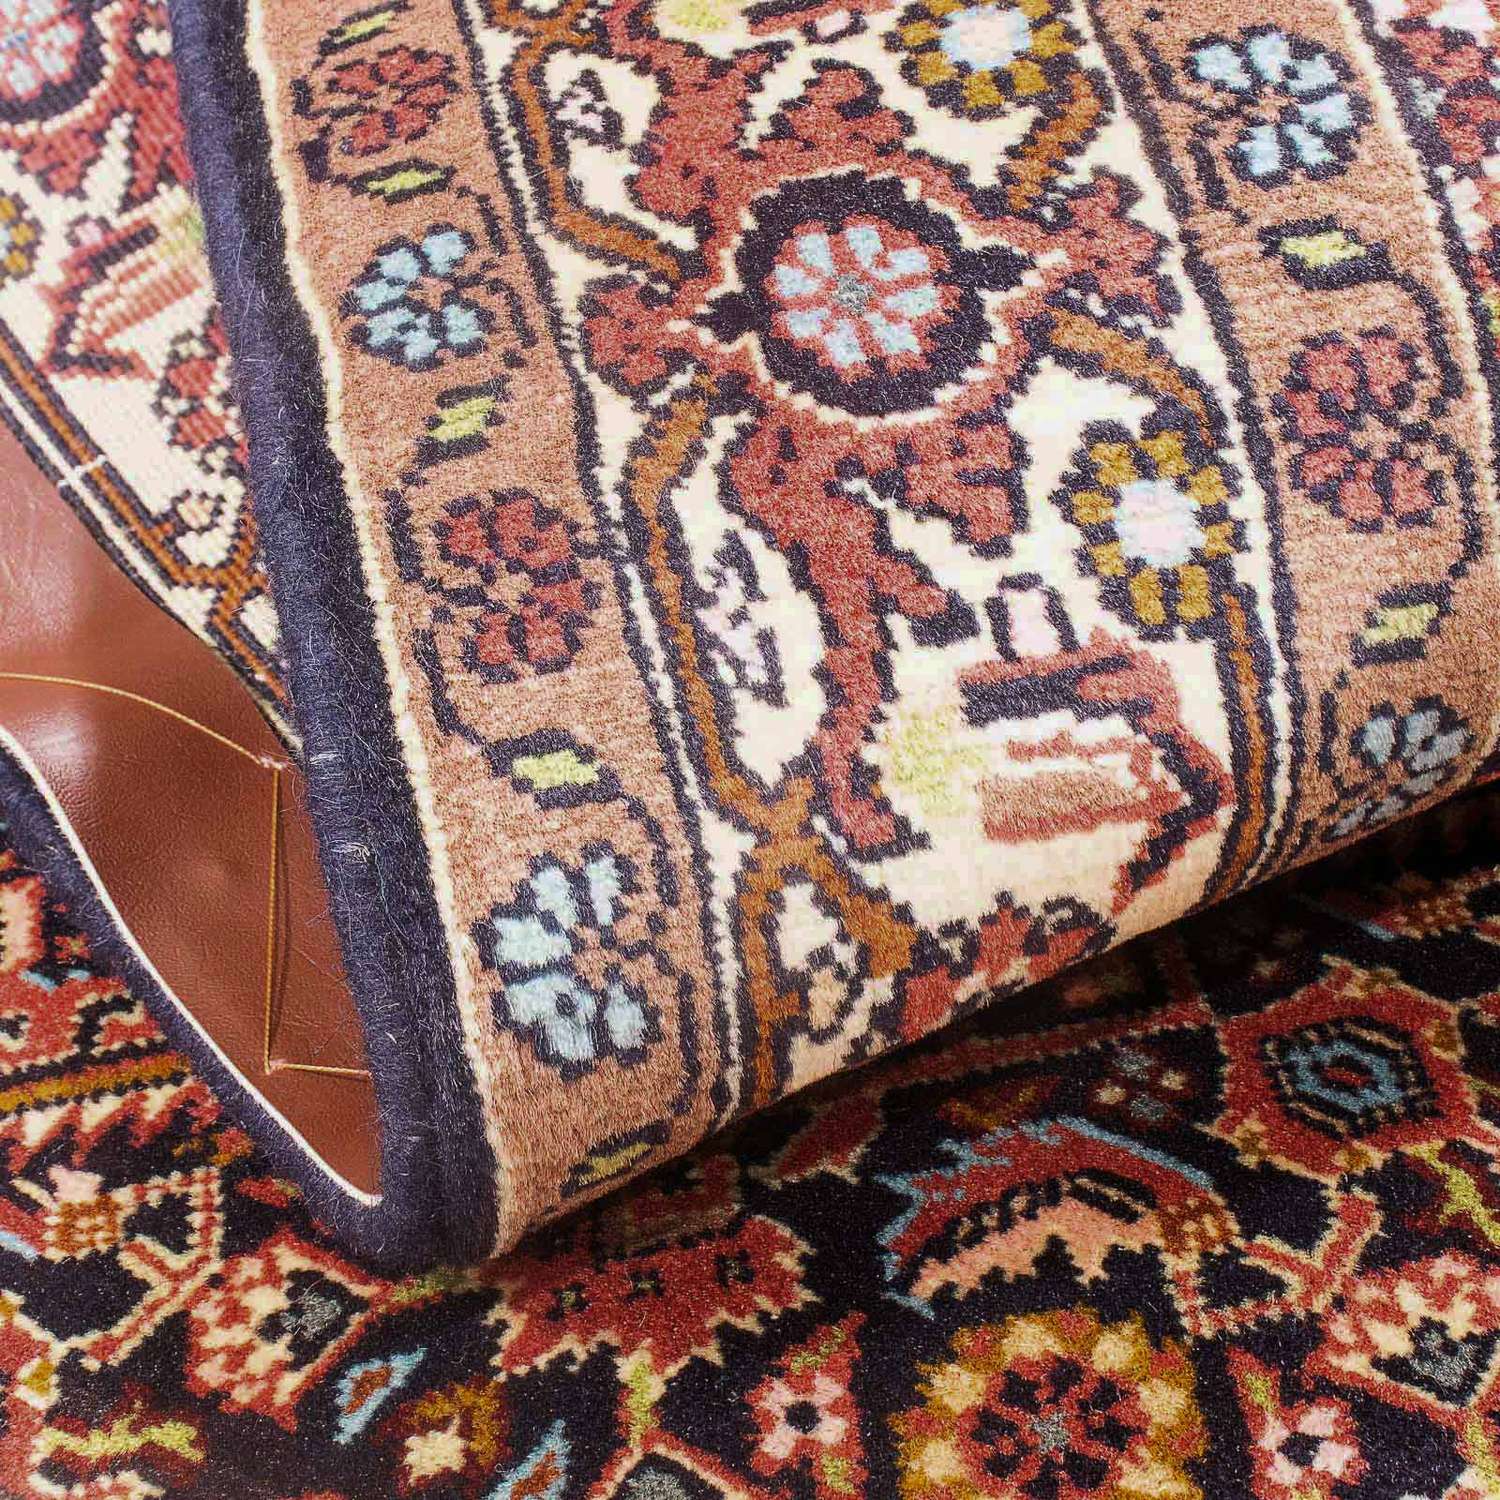 Persisk teppe - Bijar - 150 x 81 cm - lys rød